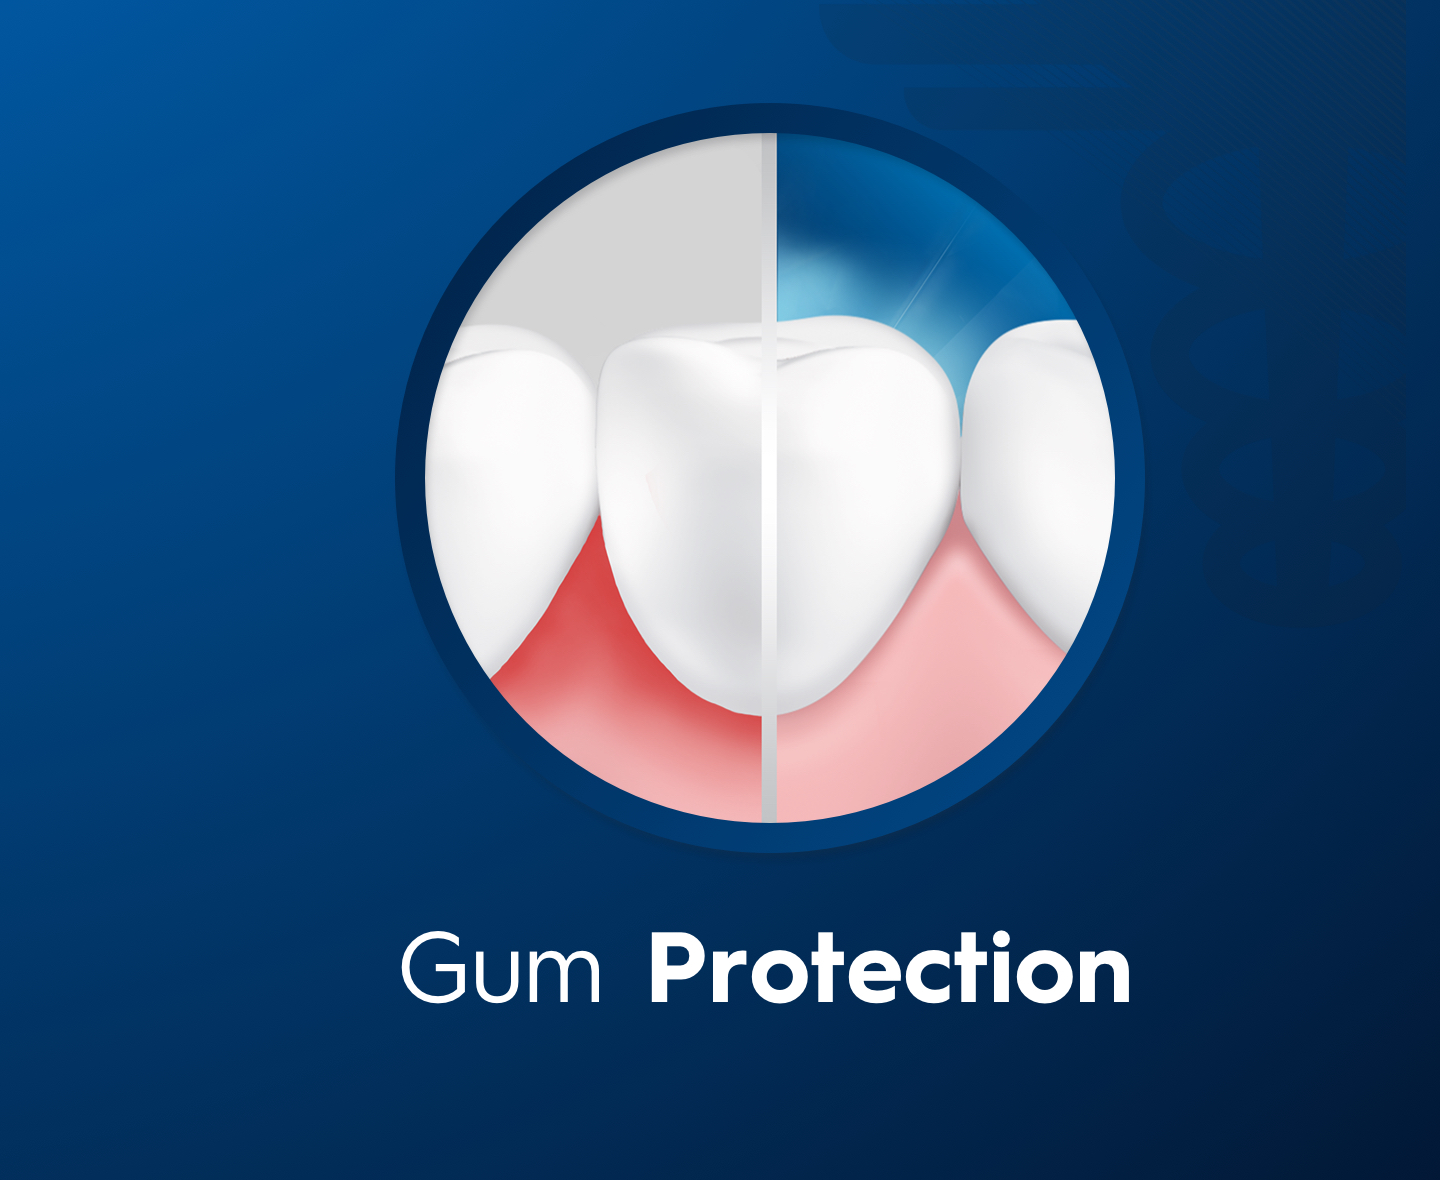 Gum protection